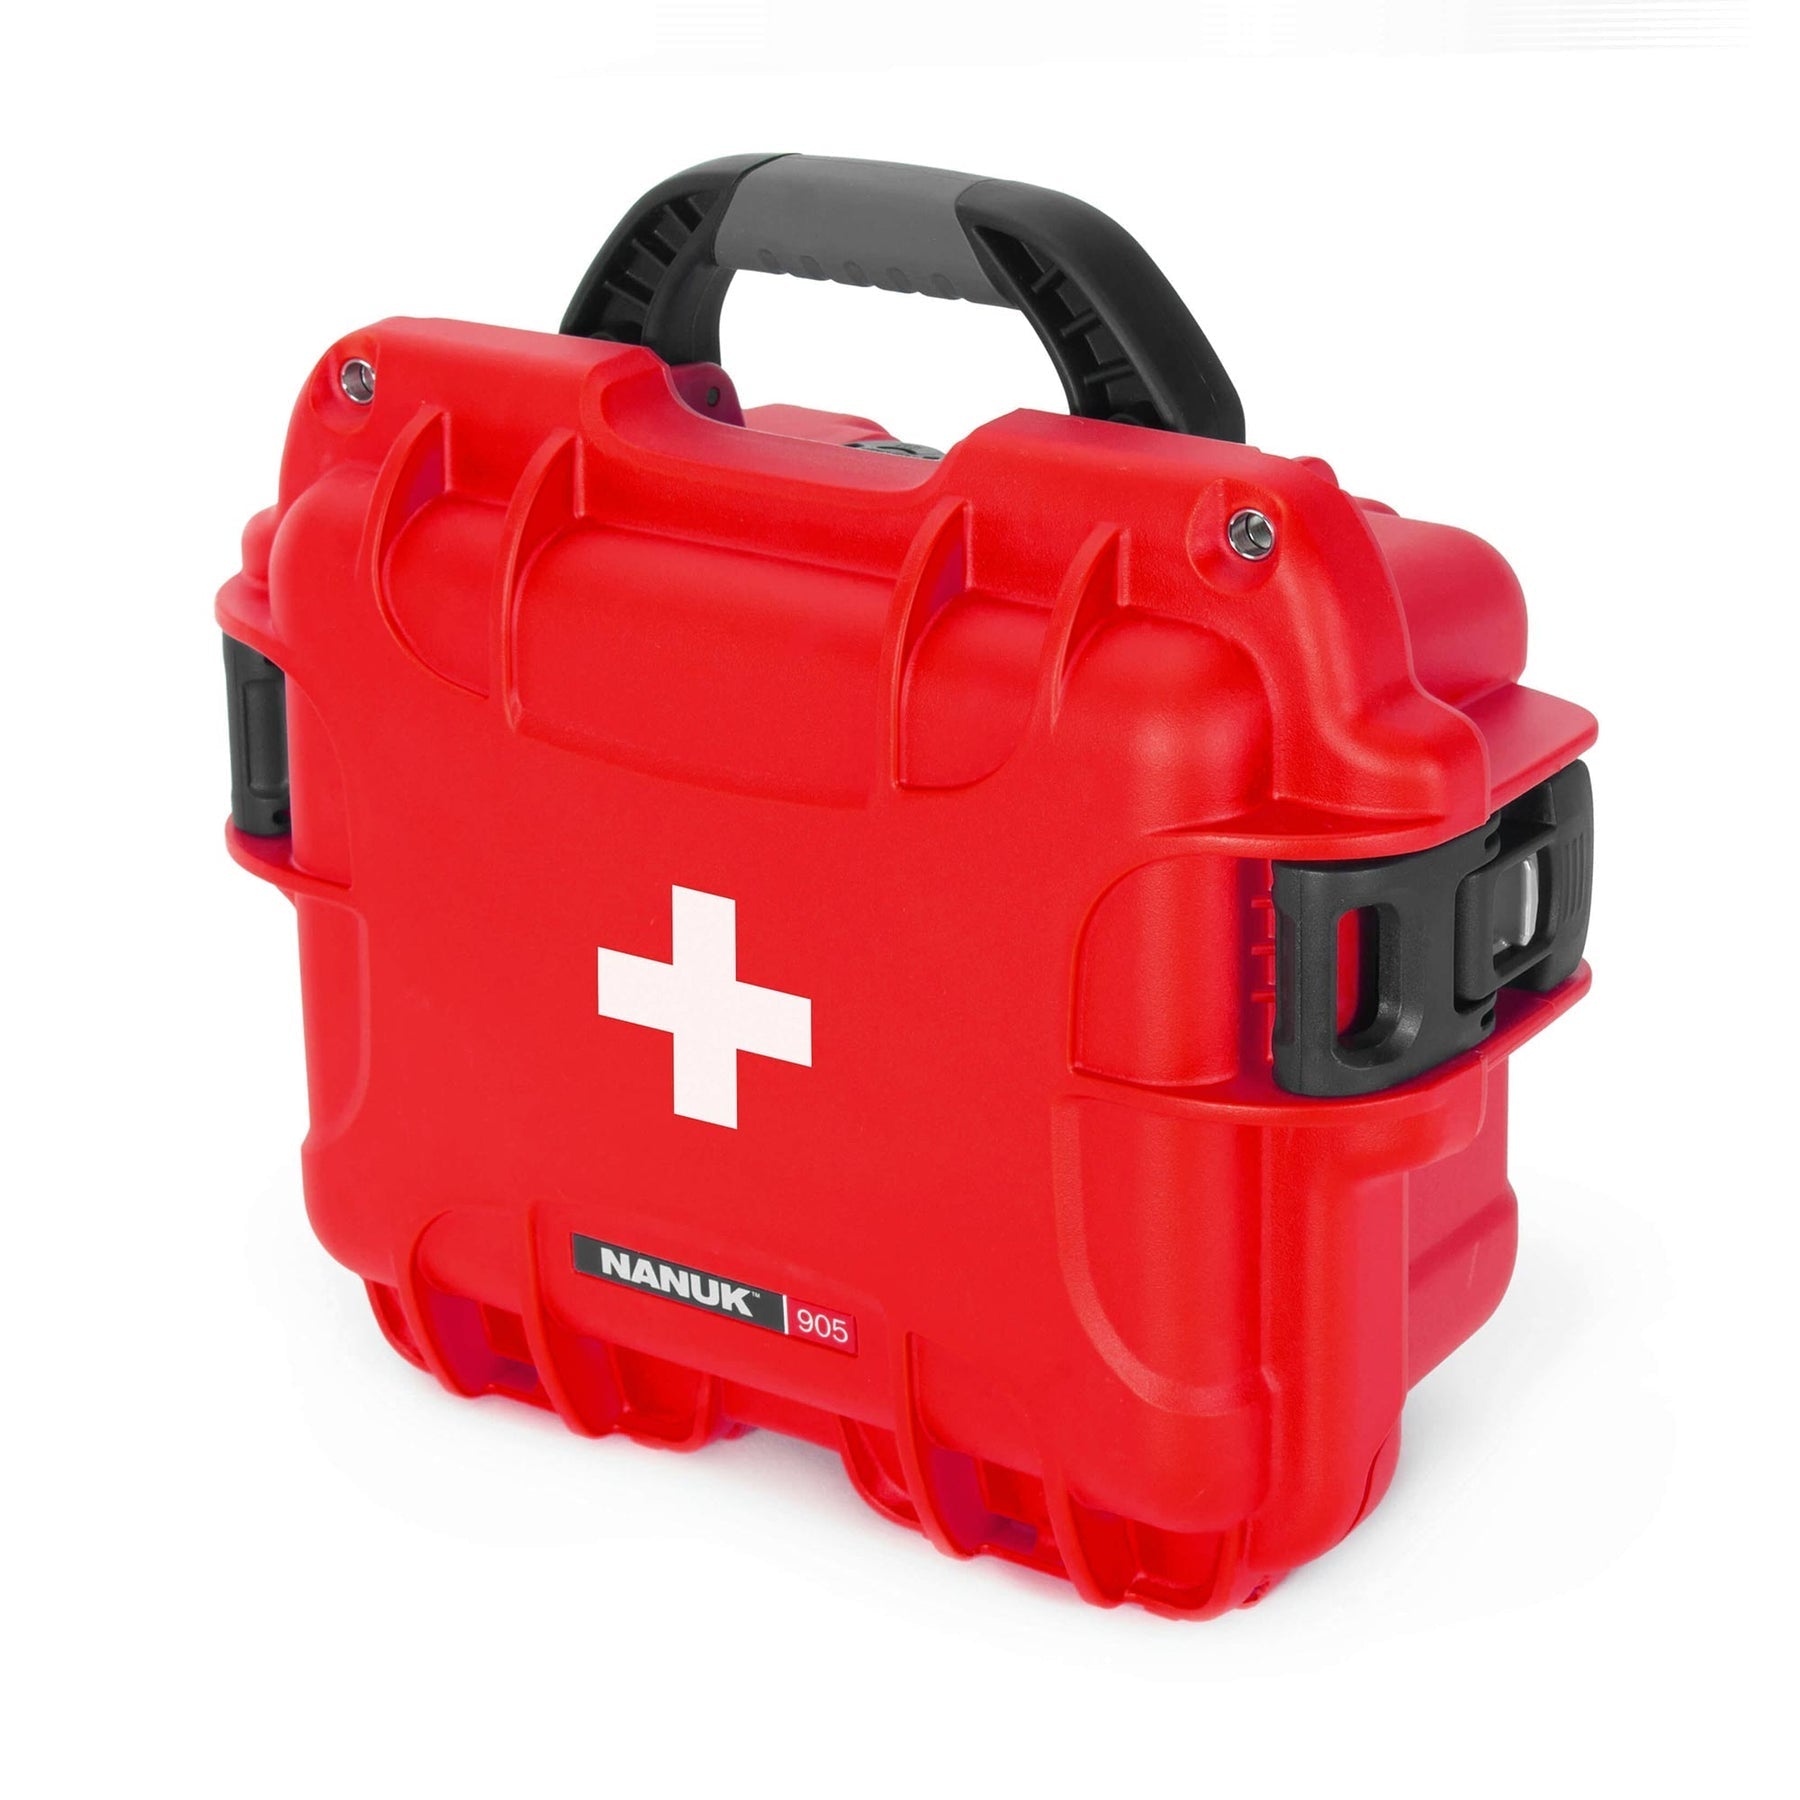 Nanuk 905 First Aid Case